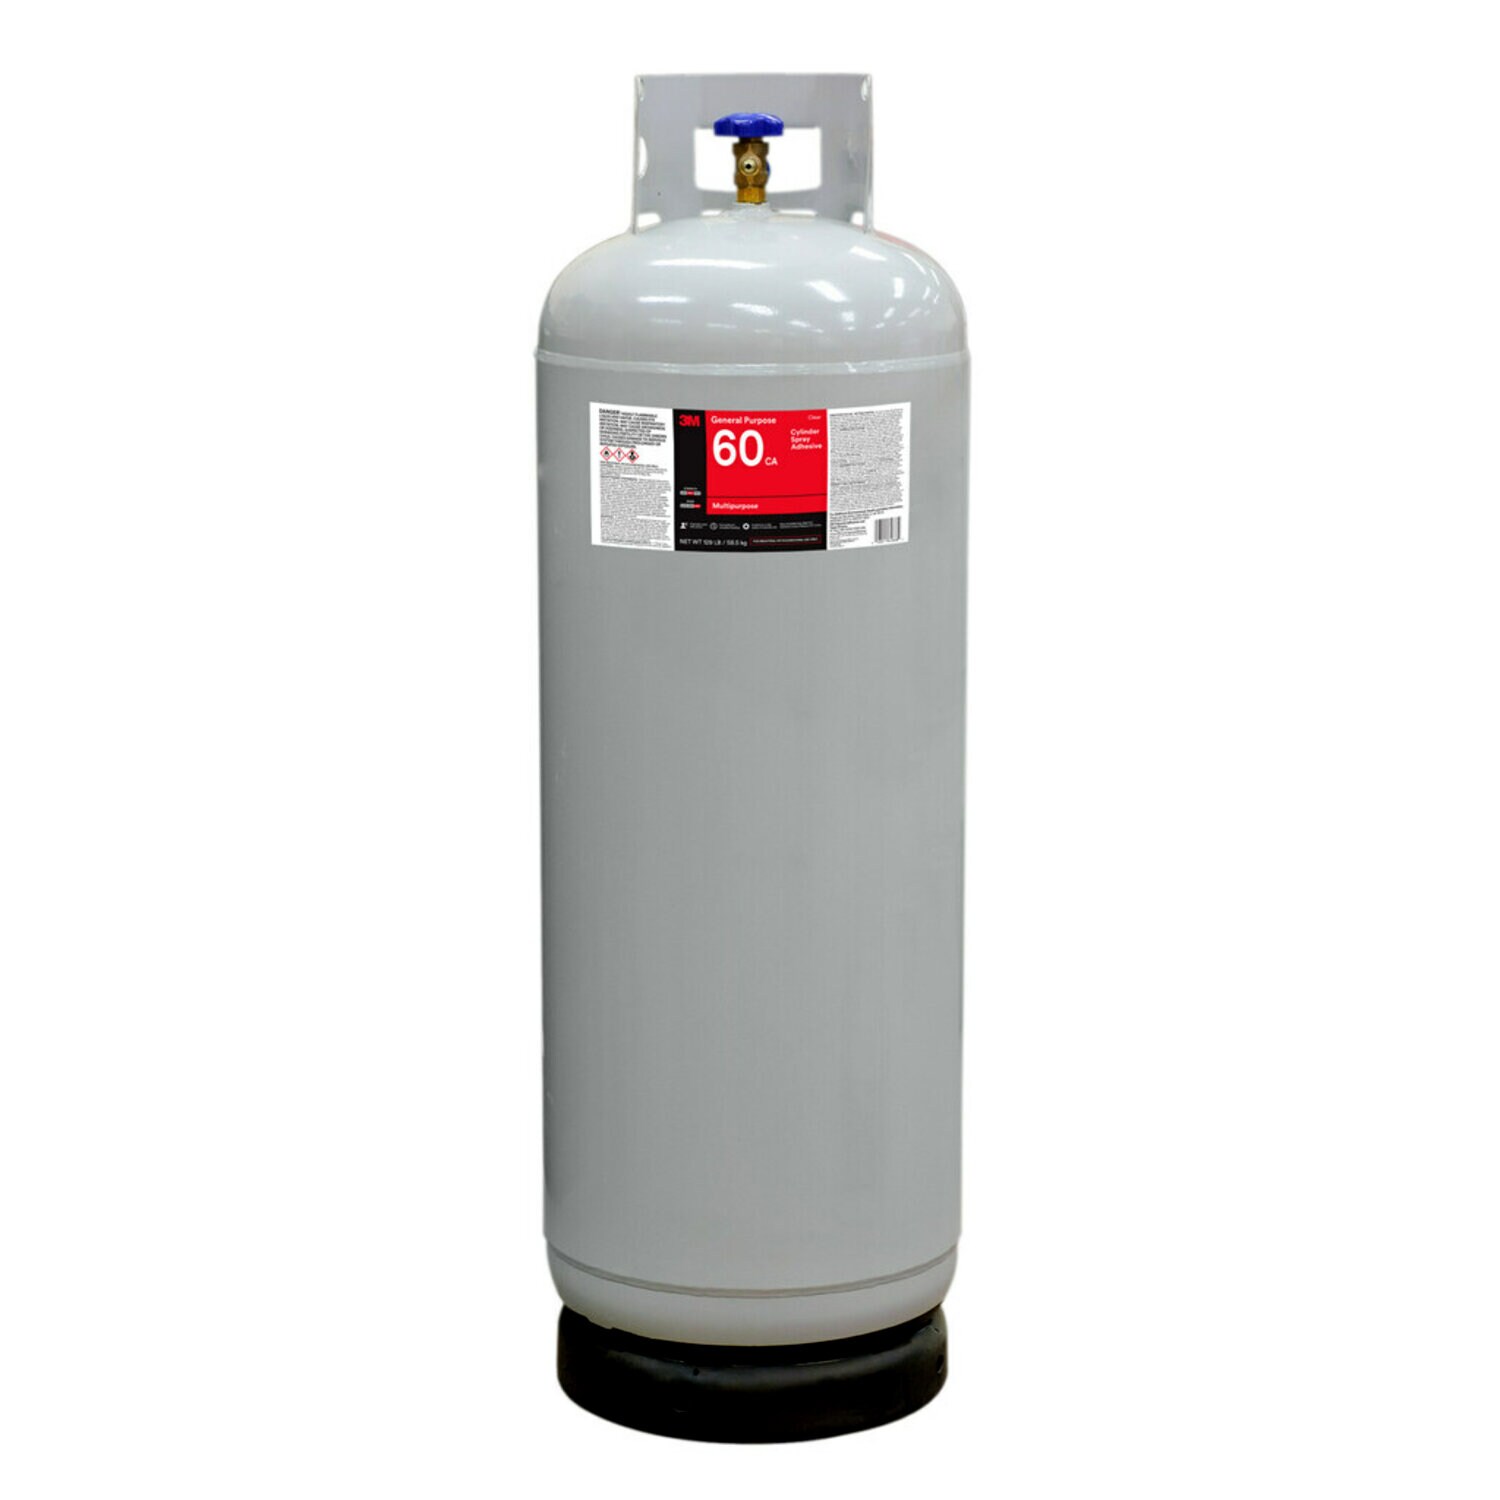 7010366492 - 3M General Purpose 60 CA Cylinder Spray Adhesive Low VOC, Clear,
Intermediate Cylinder (Net Wt 129.2 lb)